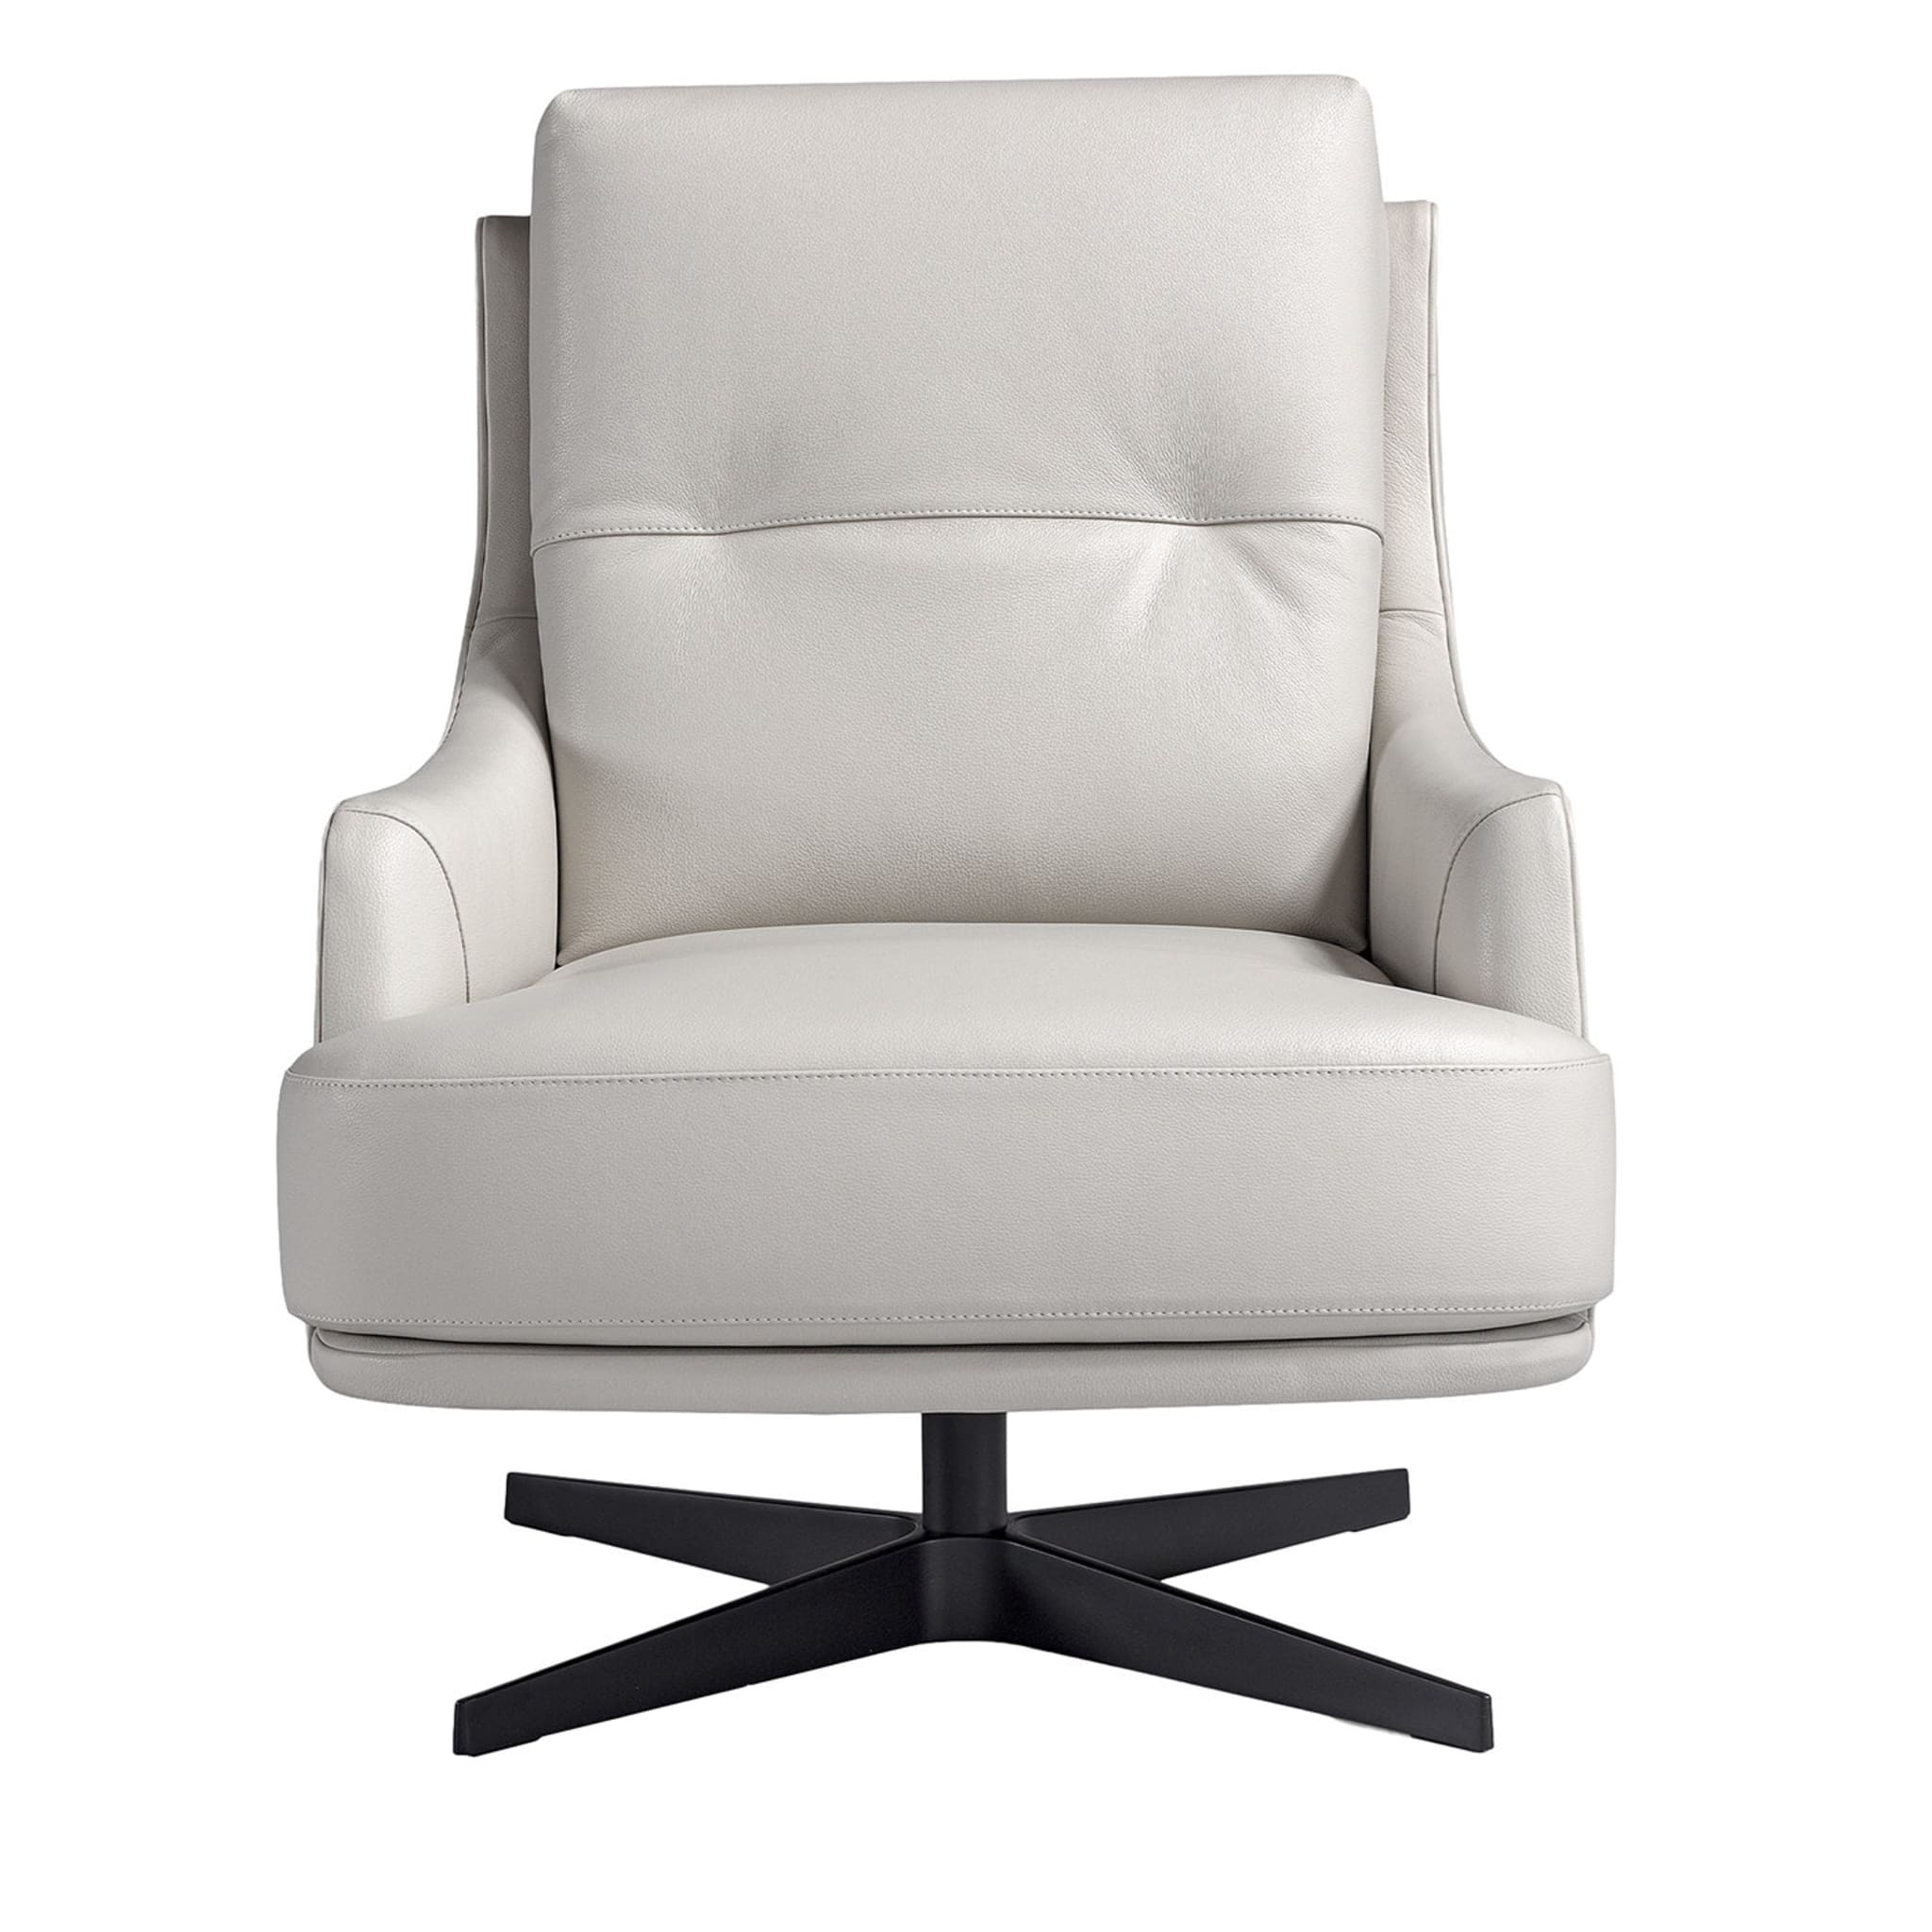 Lipari White Leather Swivel Armchair - Main view